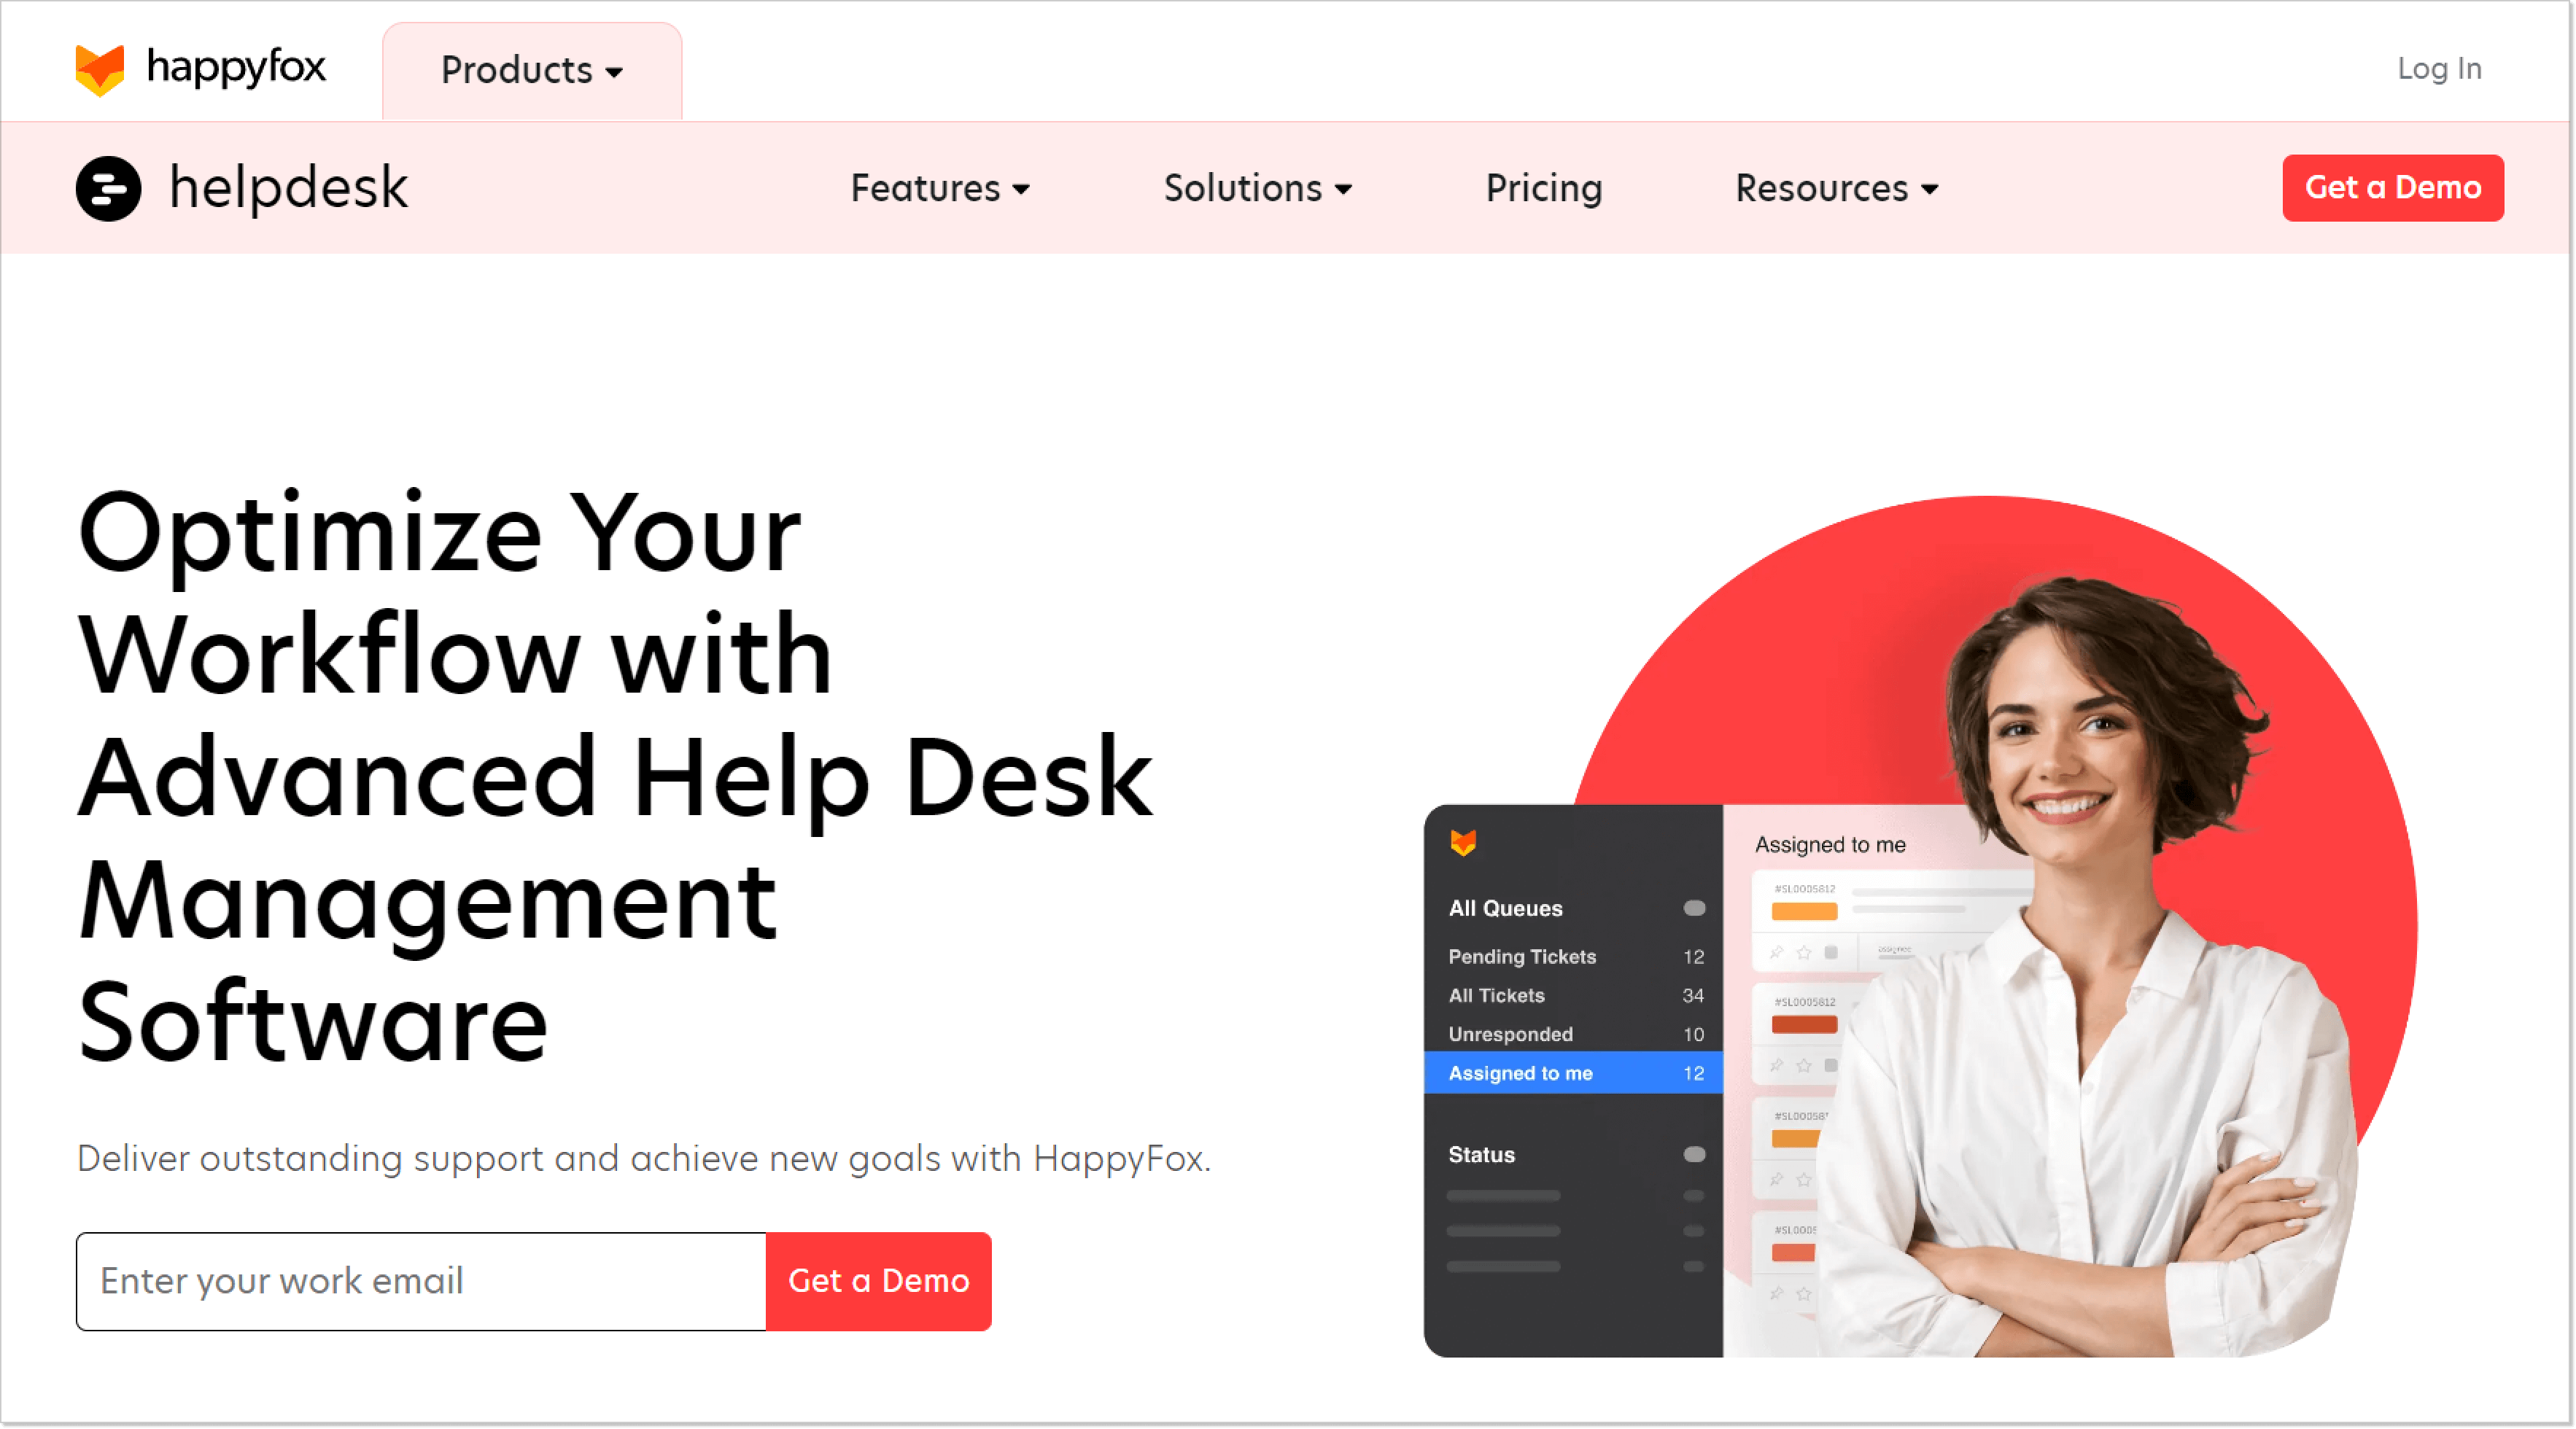 happyfox customer service software landing page screenshot